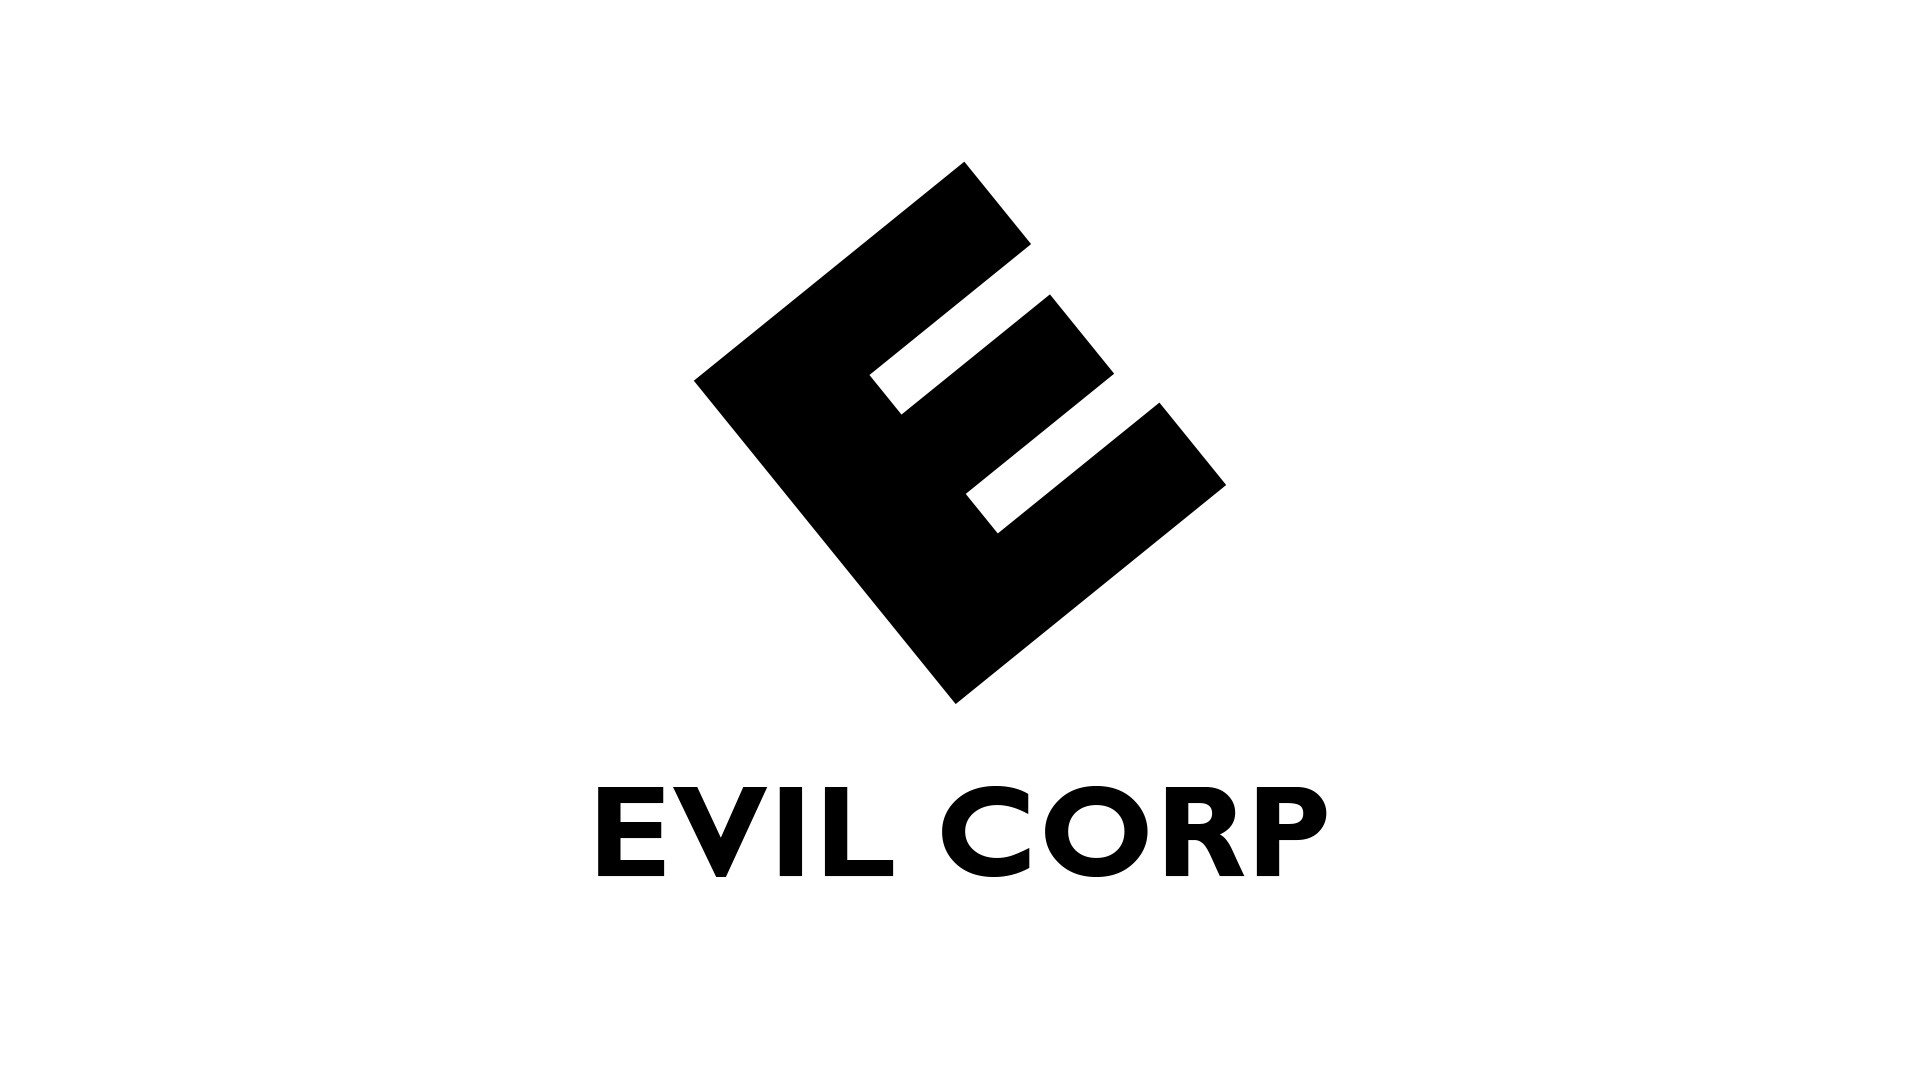 Mr. Robot, E Corp, EVIL CORP Wallpaper